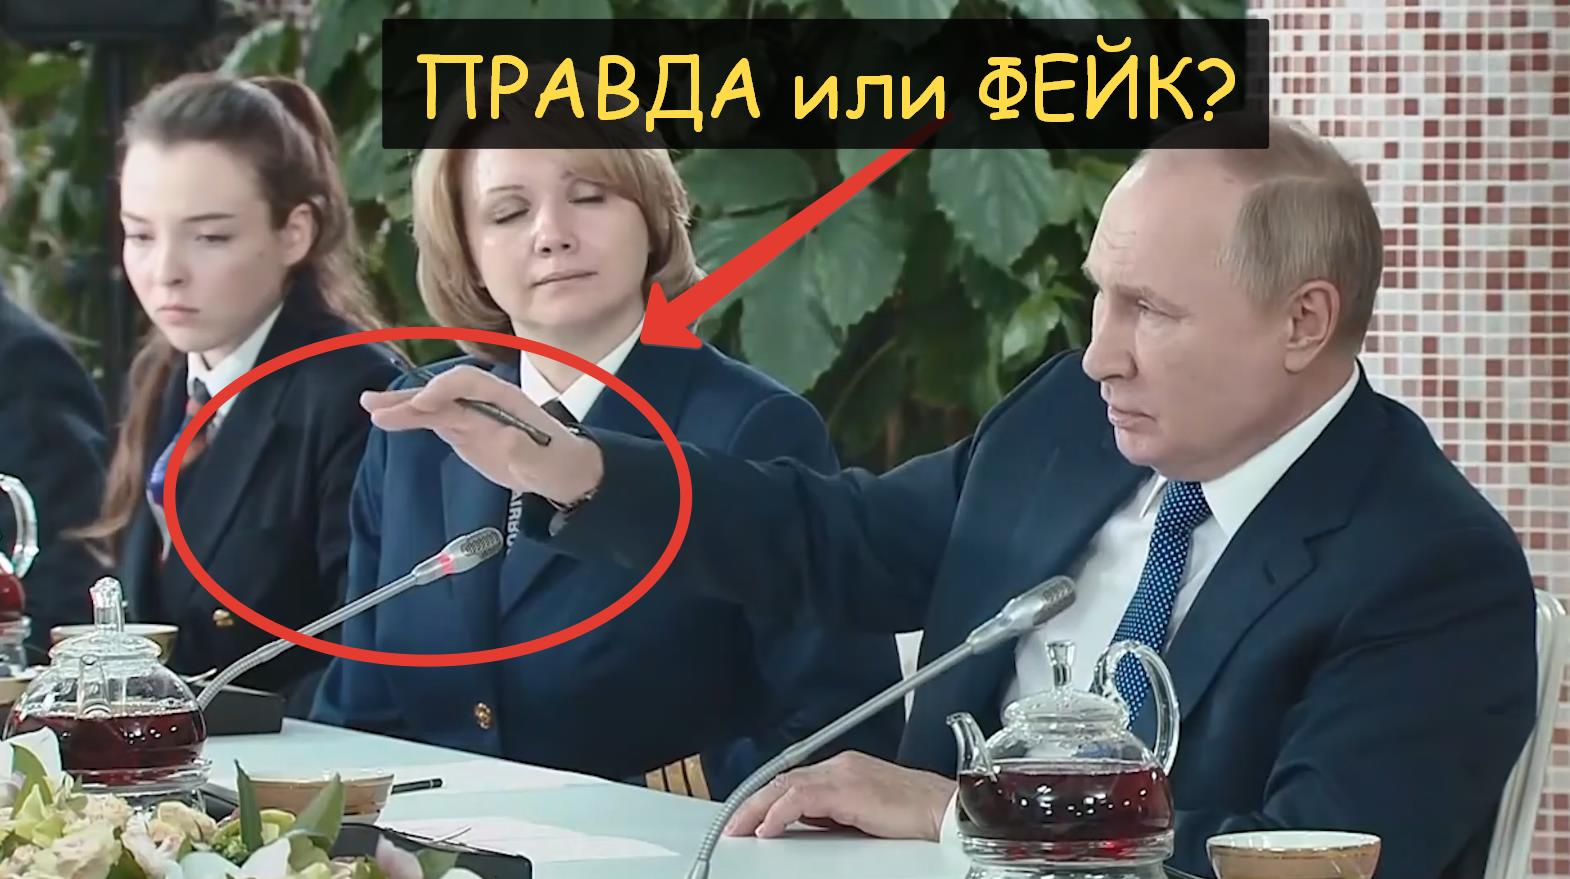 Путин с микрофоном